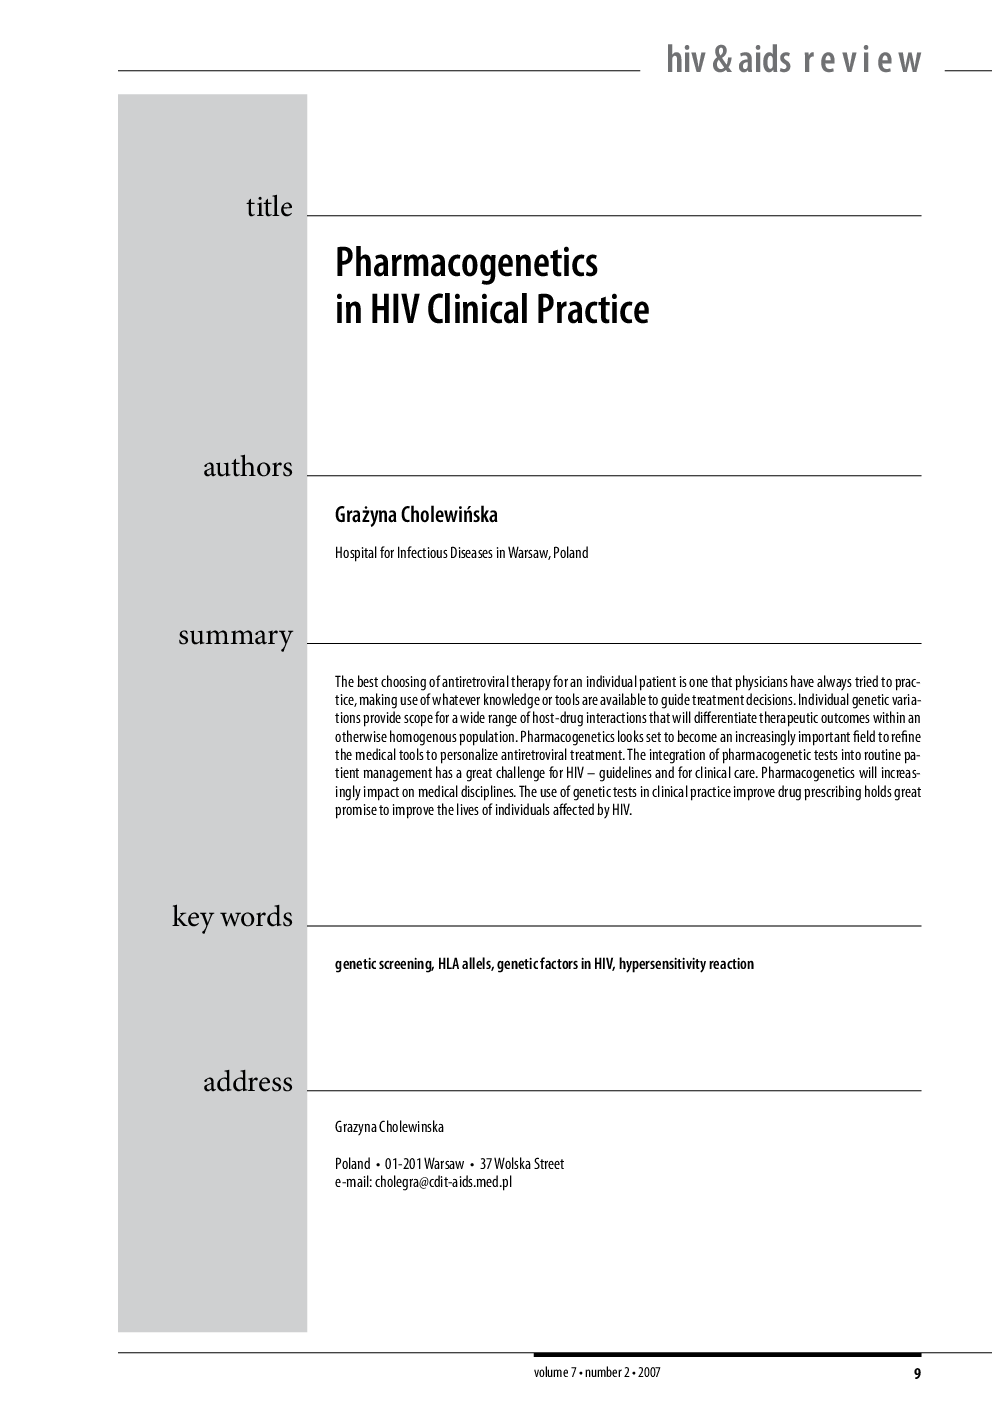 Pharmacogenetics in HIV Clinical Practice